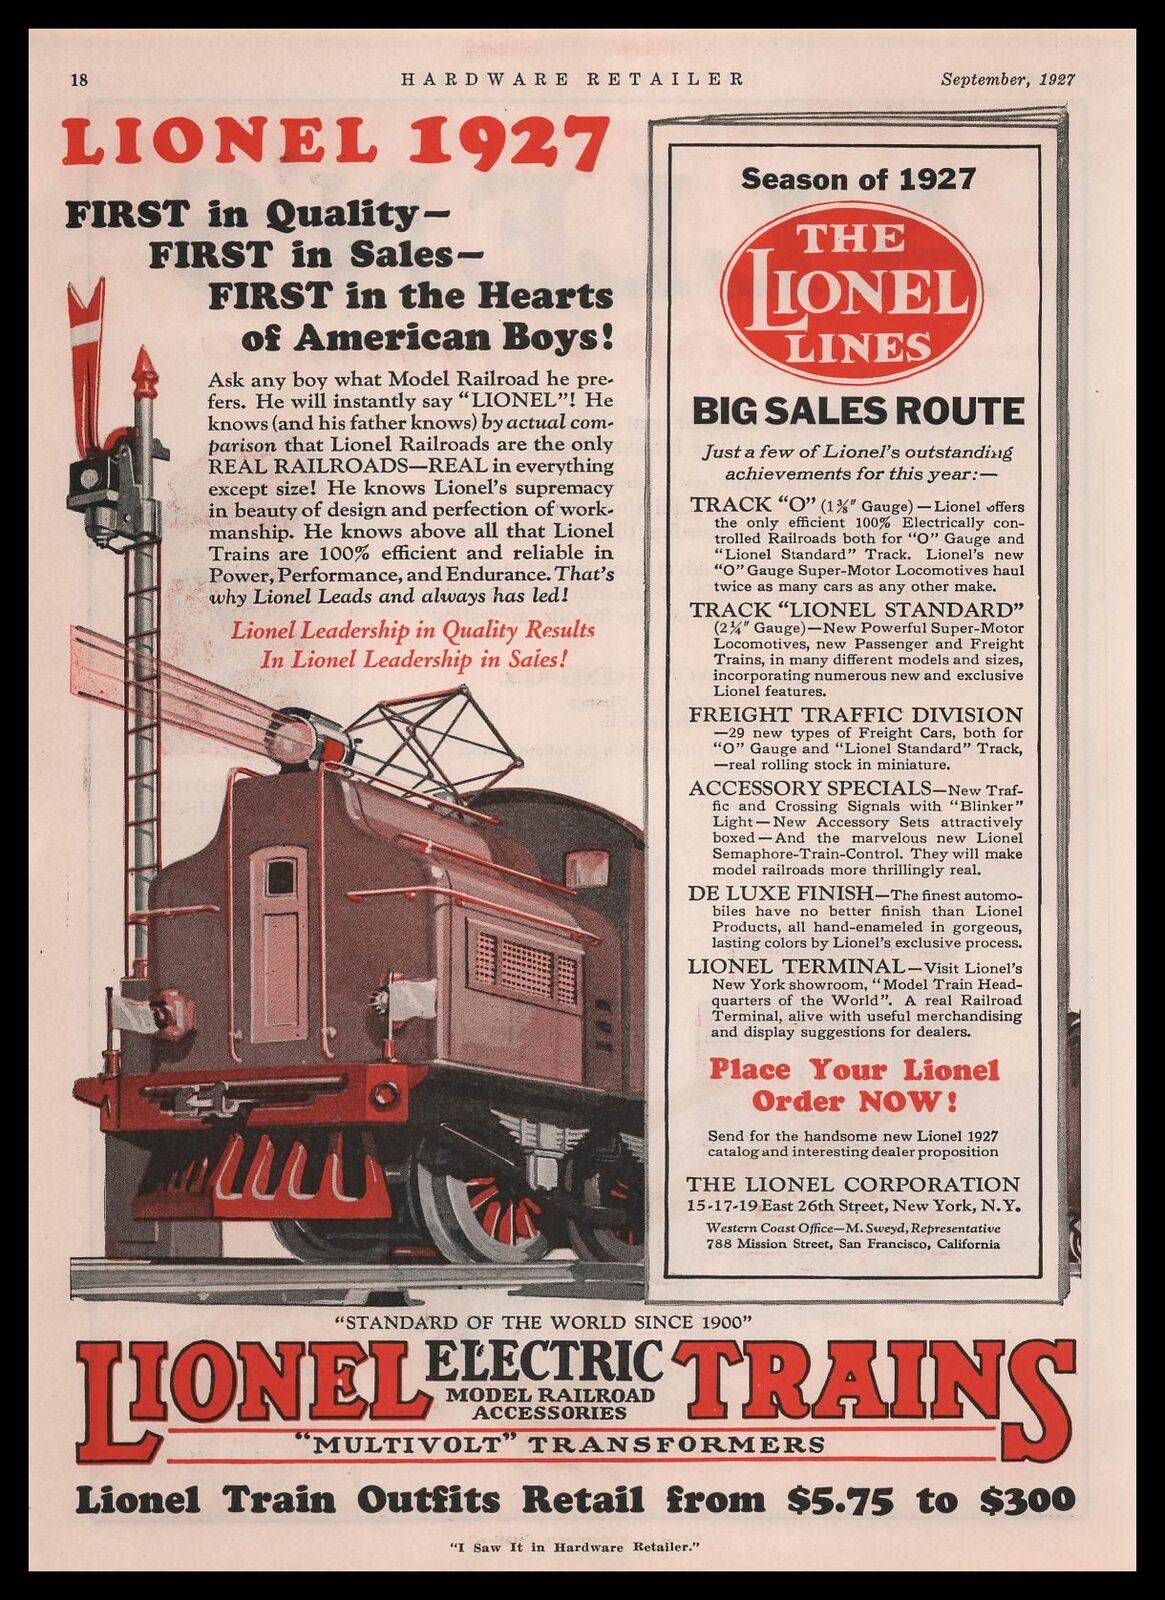 1927 Lionel Electric Model Railroad Train Lines Multivolt Transformers Print Ad